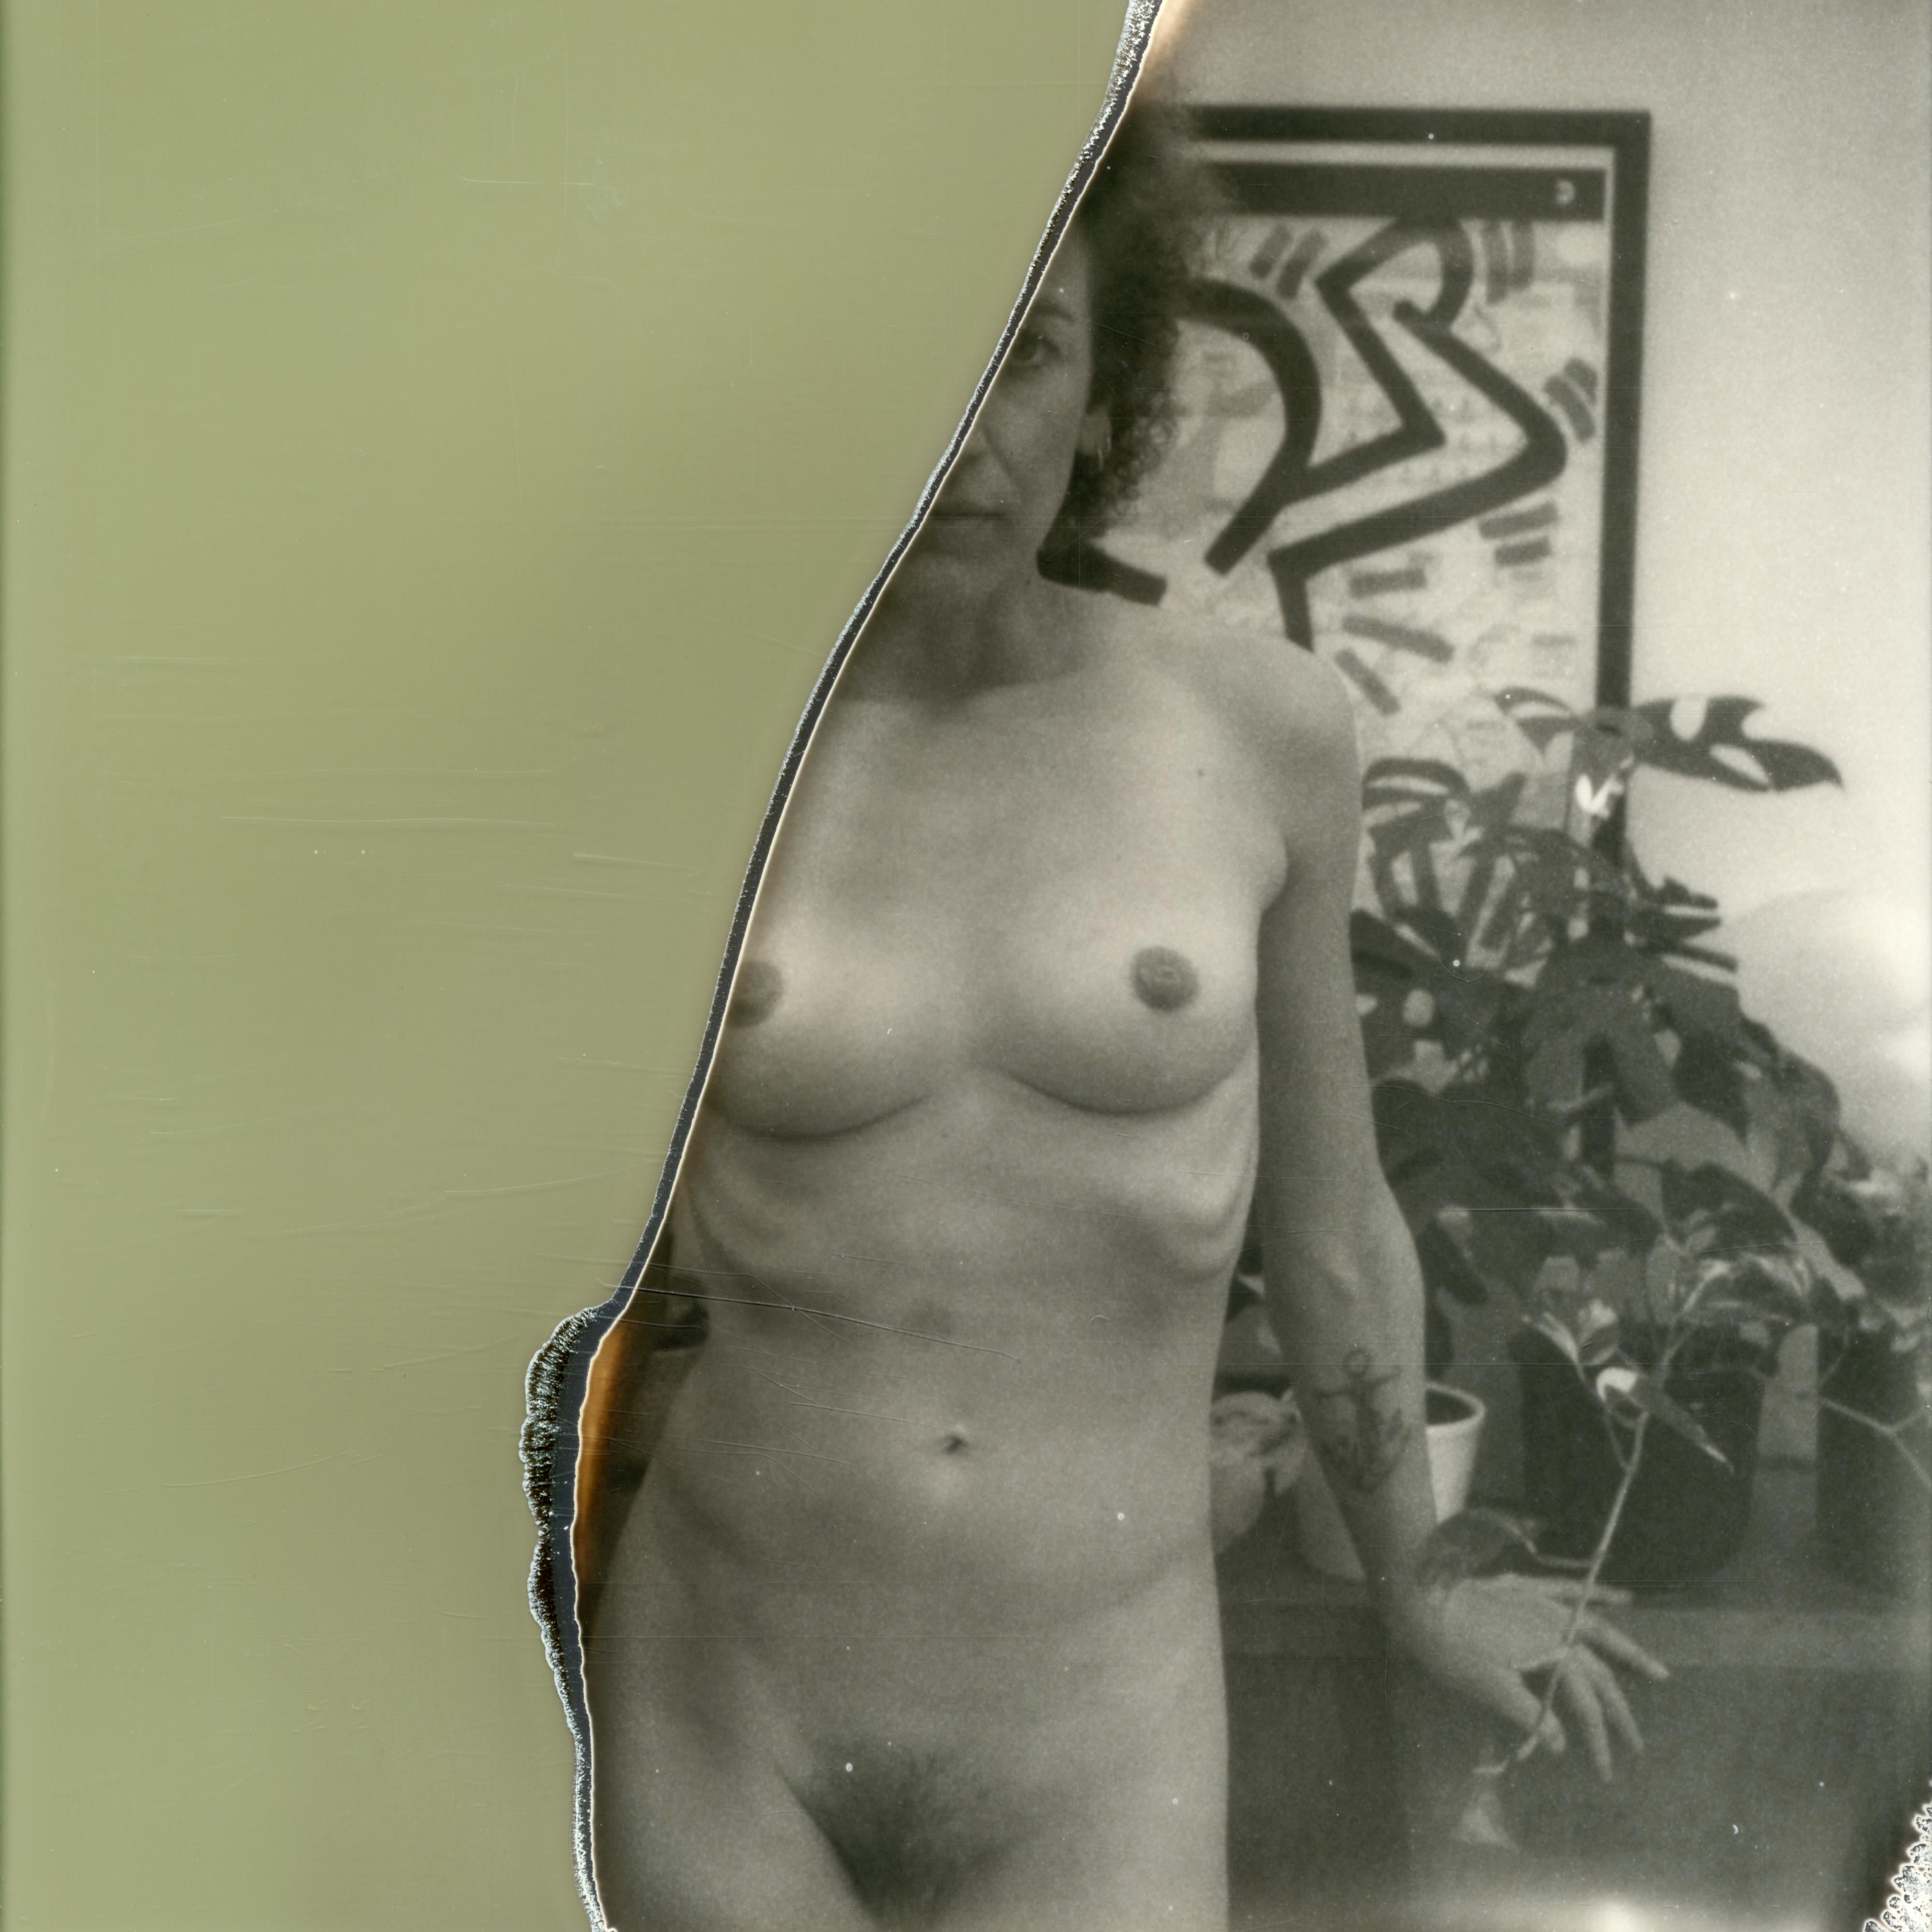 Kirsten Thys van den Audenaerde Nude Photograph - Halfway there - Contemporary, Nude, Women, Polaroid, 21st Century